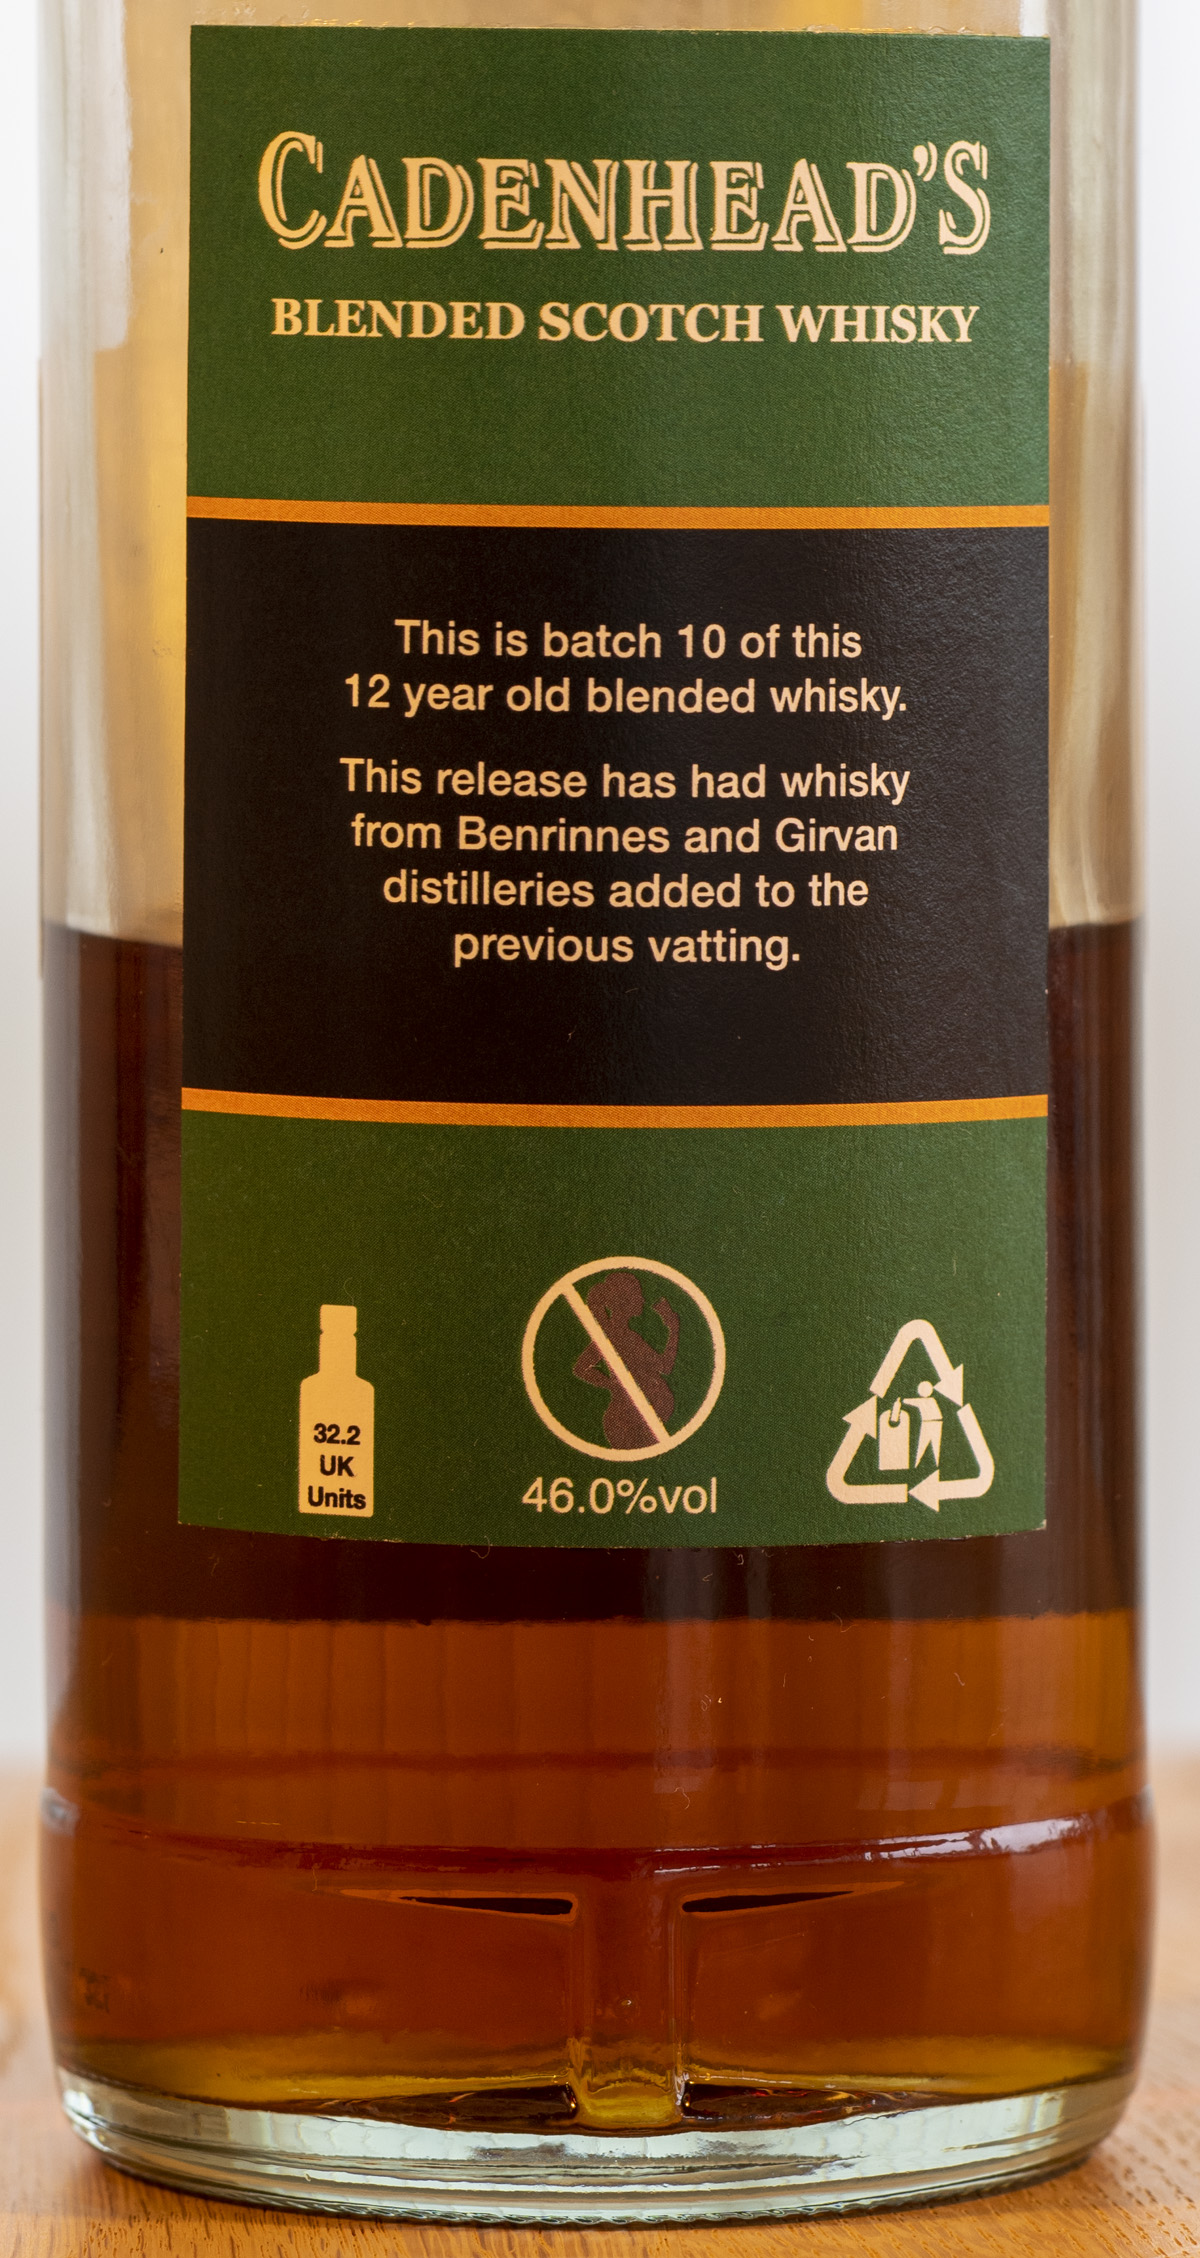 Billede: PHC_3873 - William Cadenhead Blended Scotch Whisky 12y - back.jpg